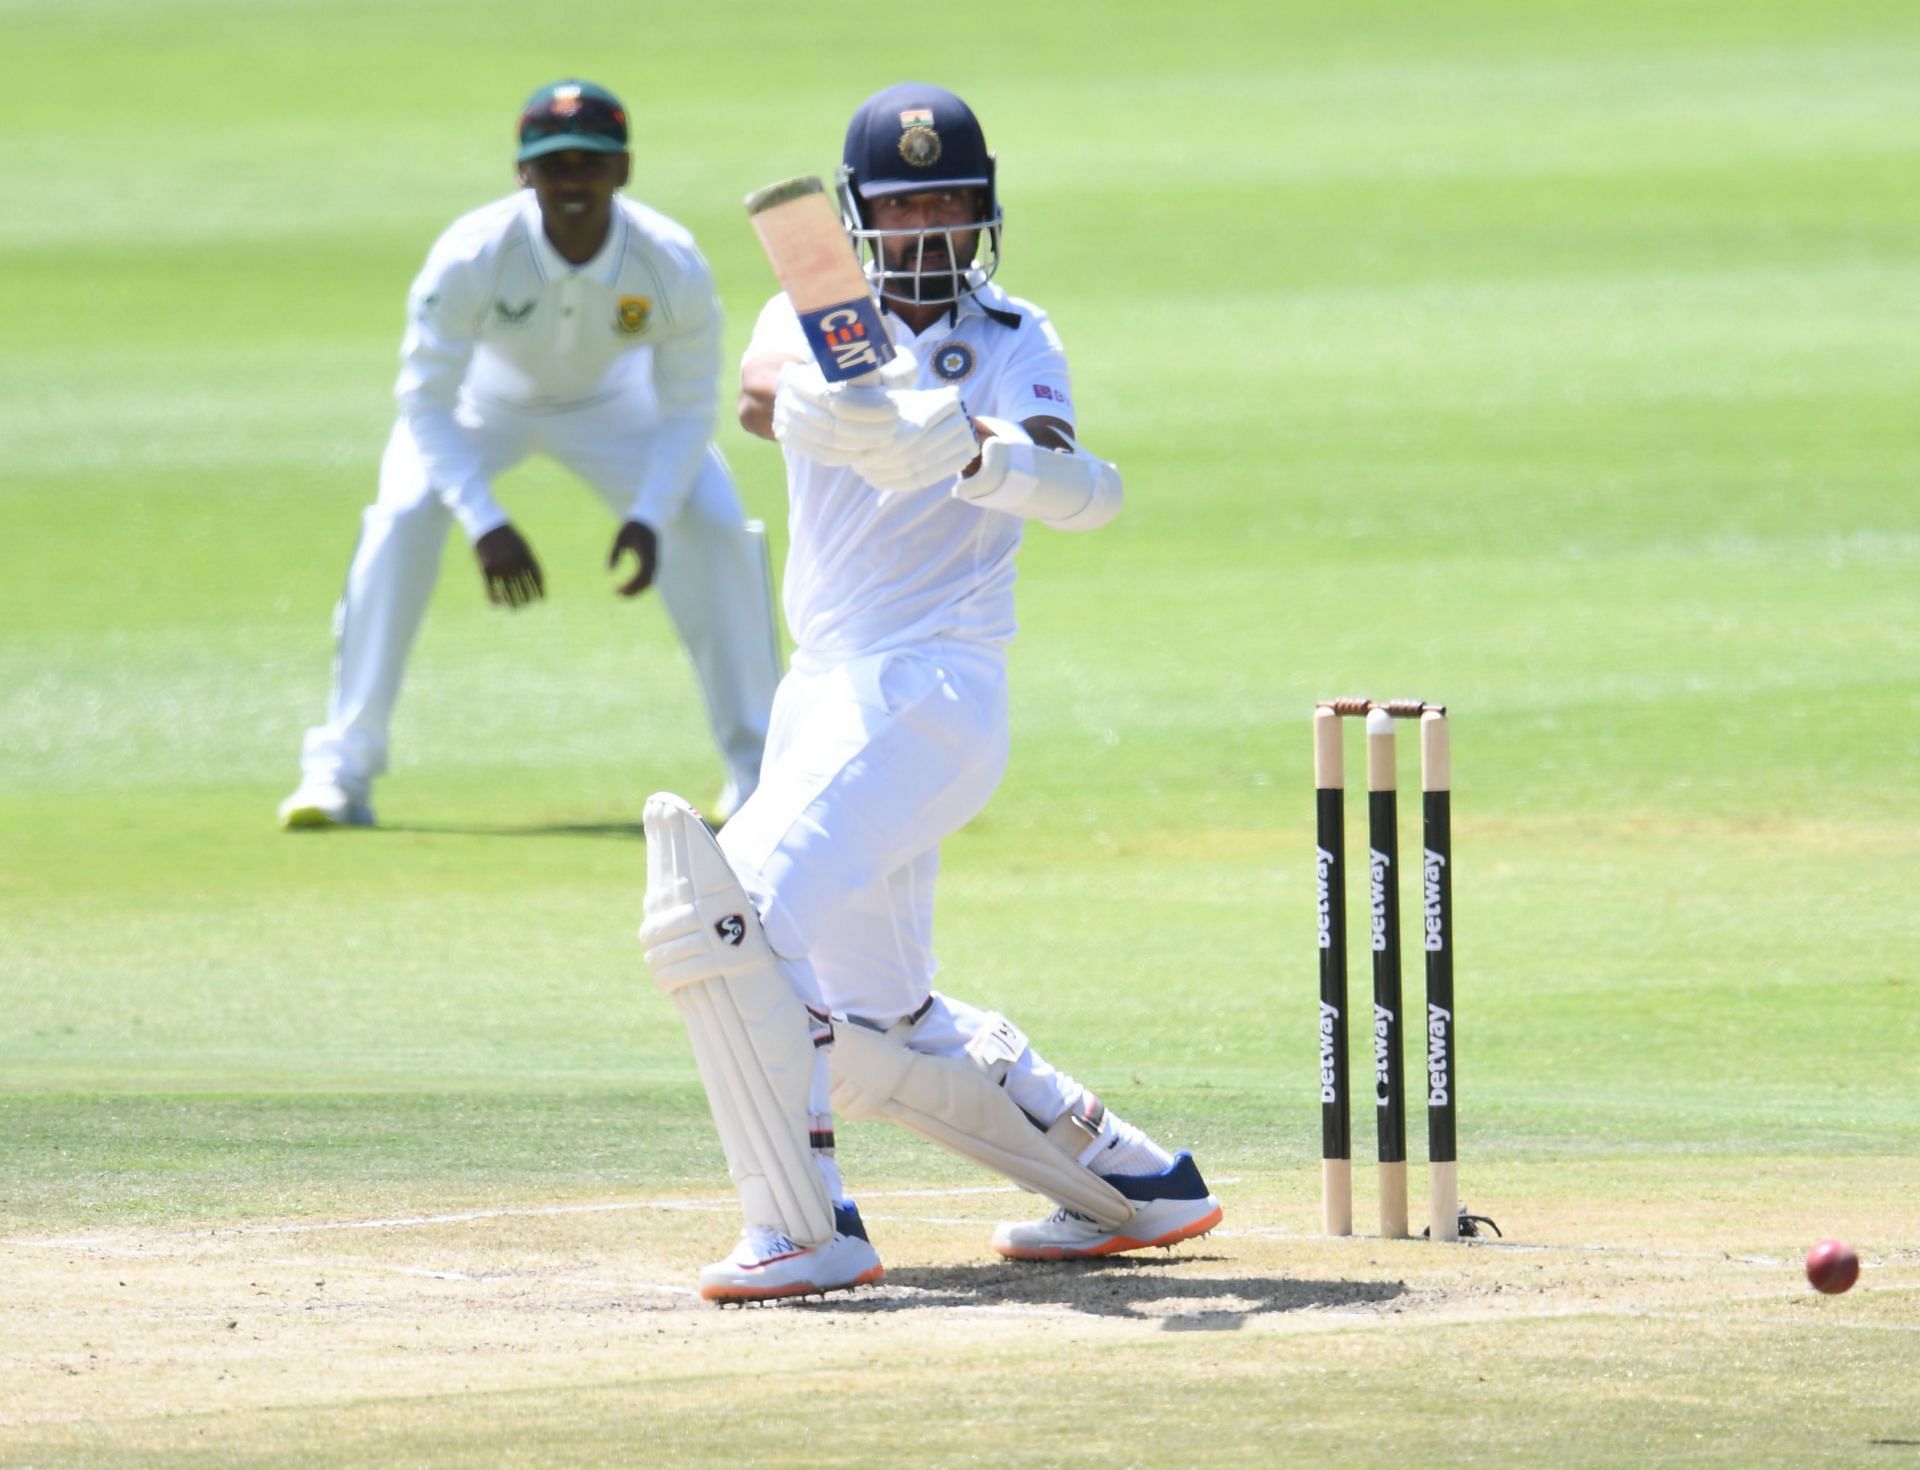 Ajinkya Rahane scored an enterprising half-century in the Johannesburg Test against South Africa.